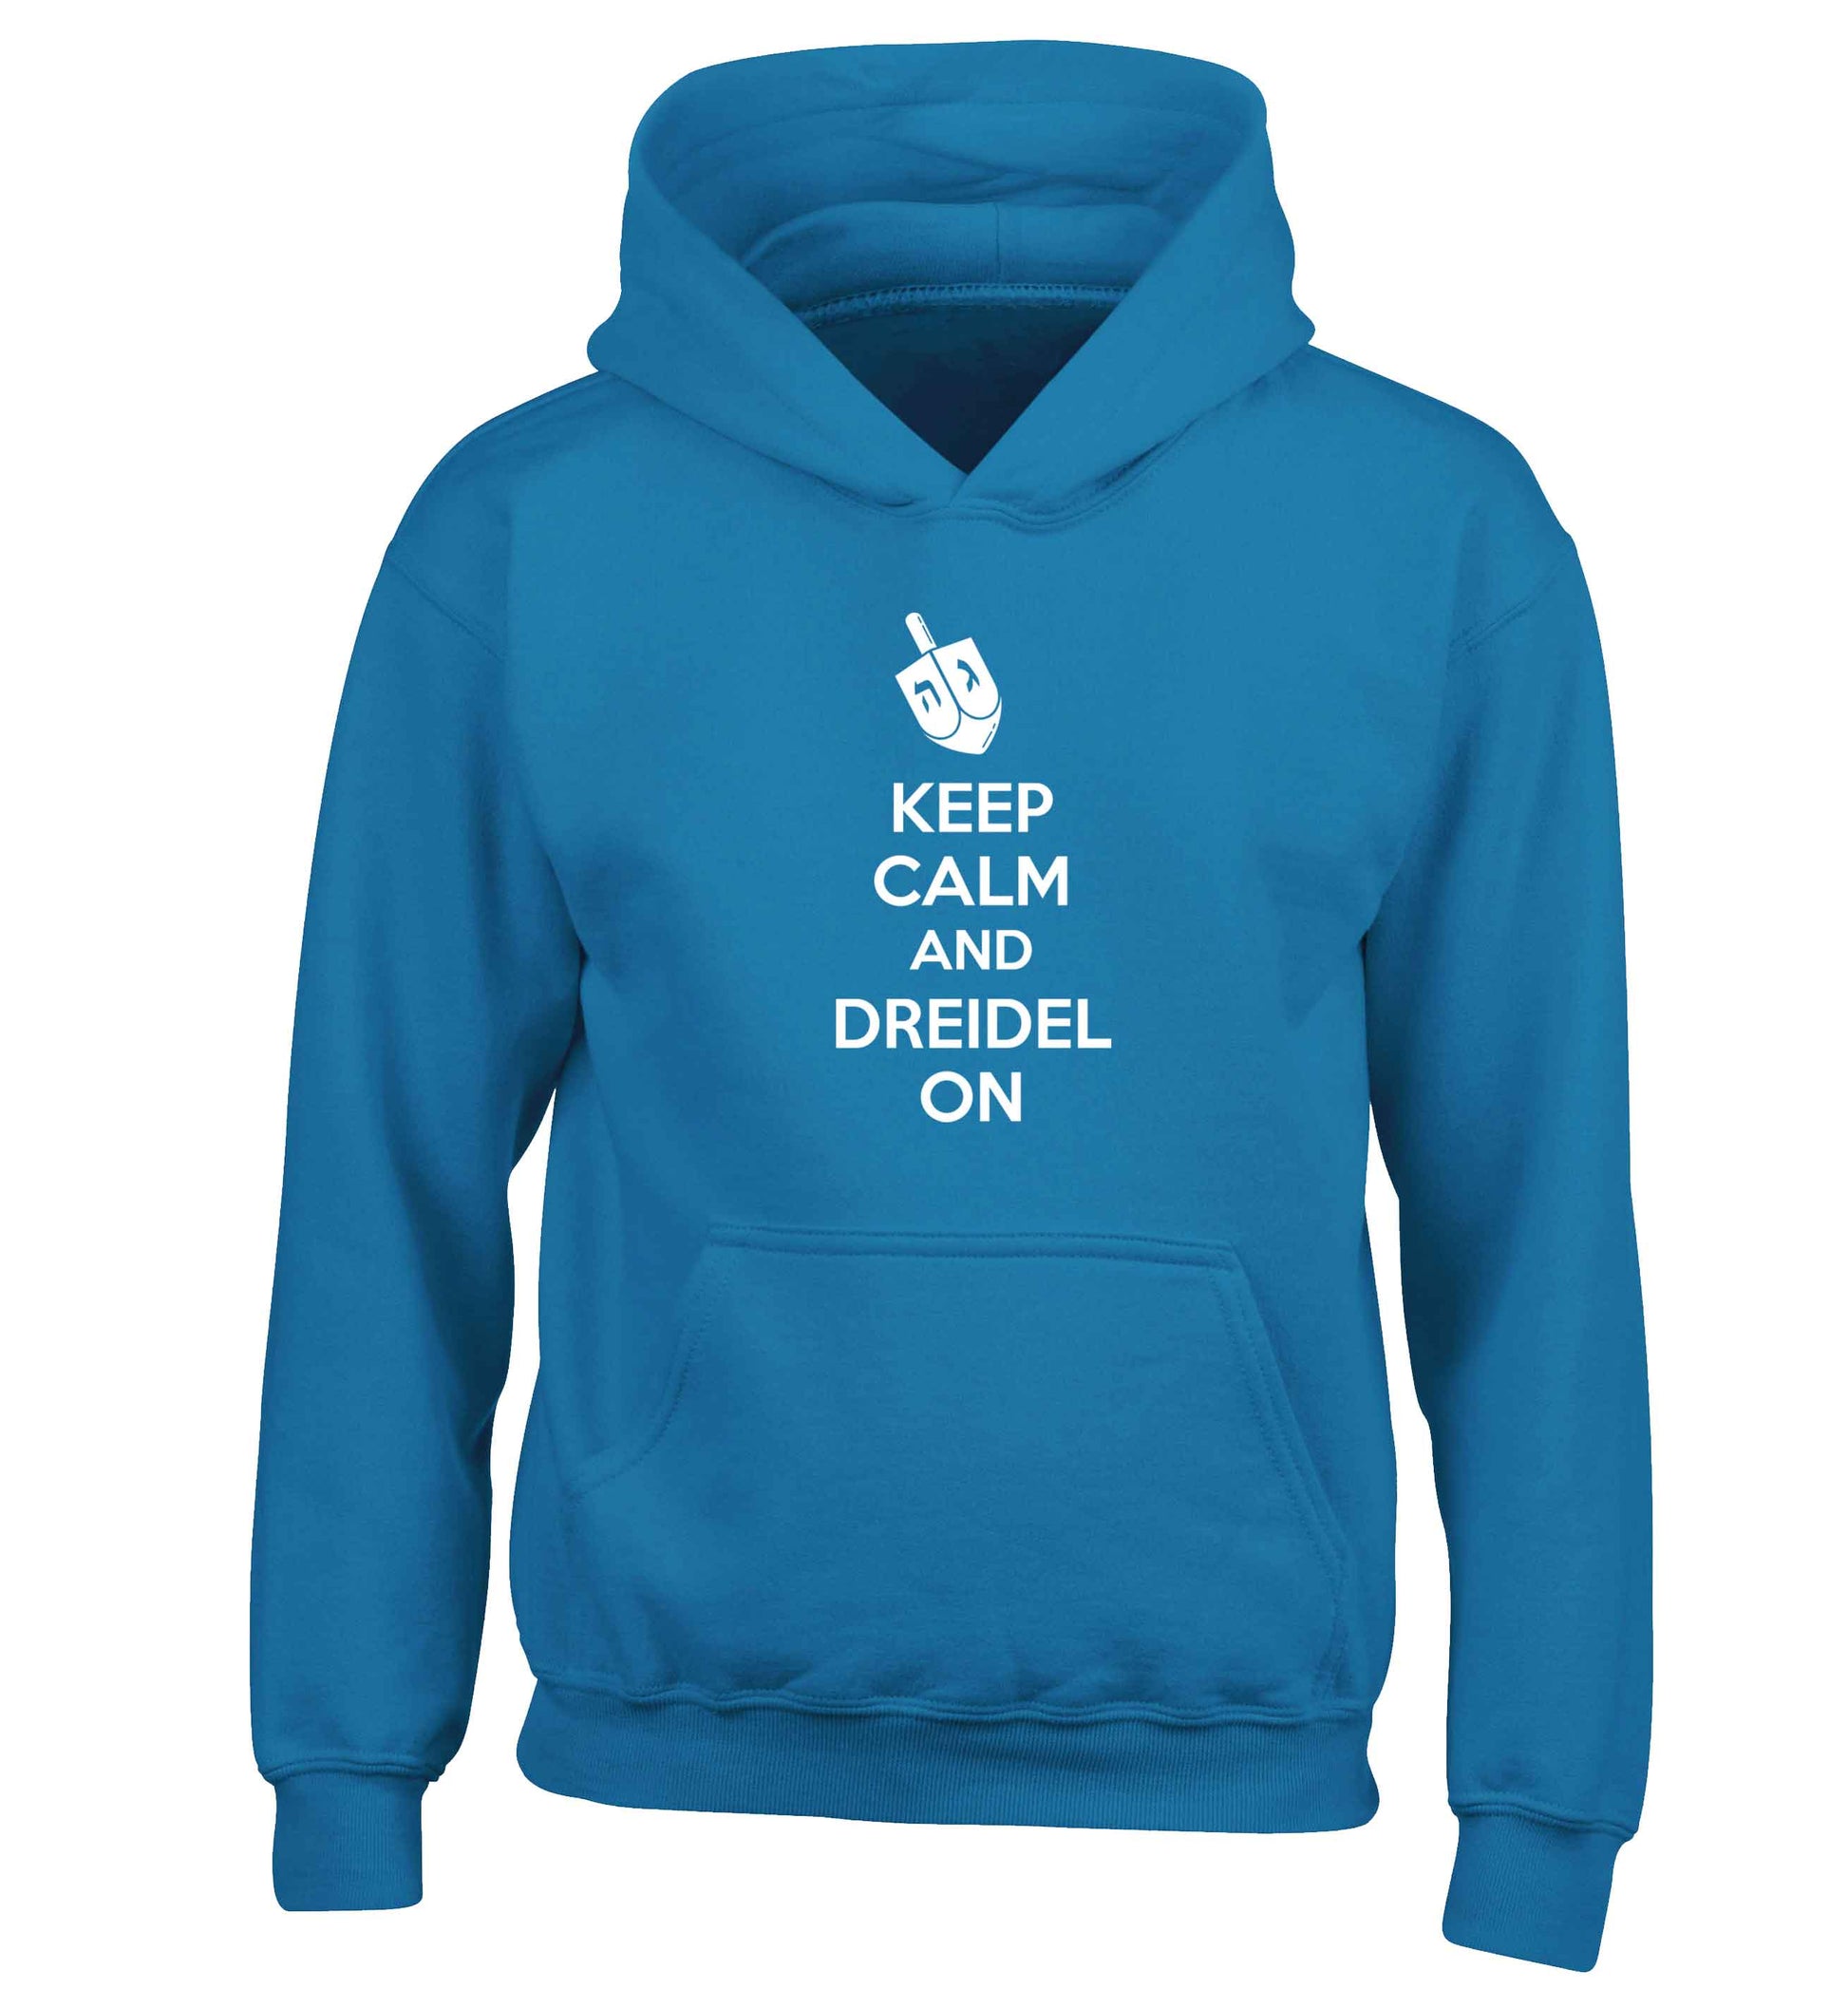 Keep calm and dreidel on children's blue hoodie 12-13 Years